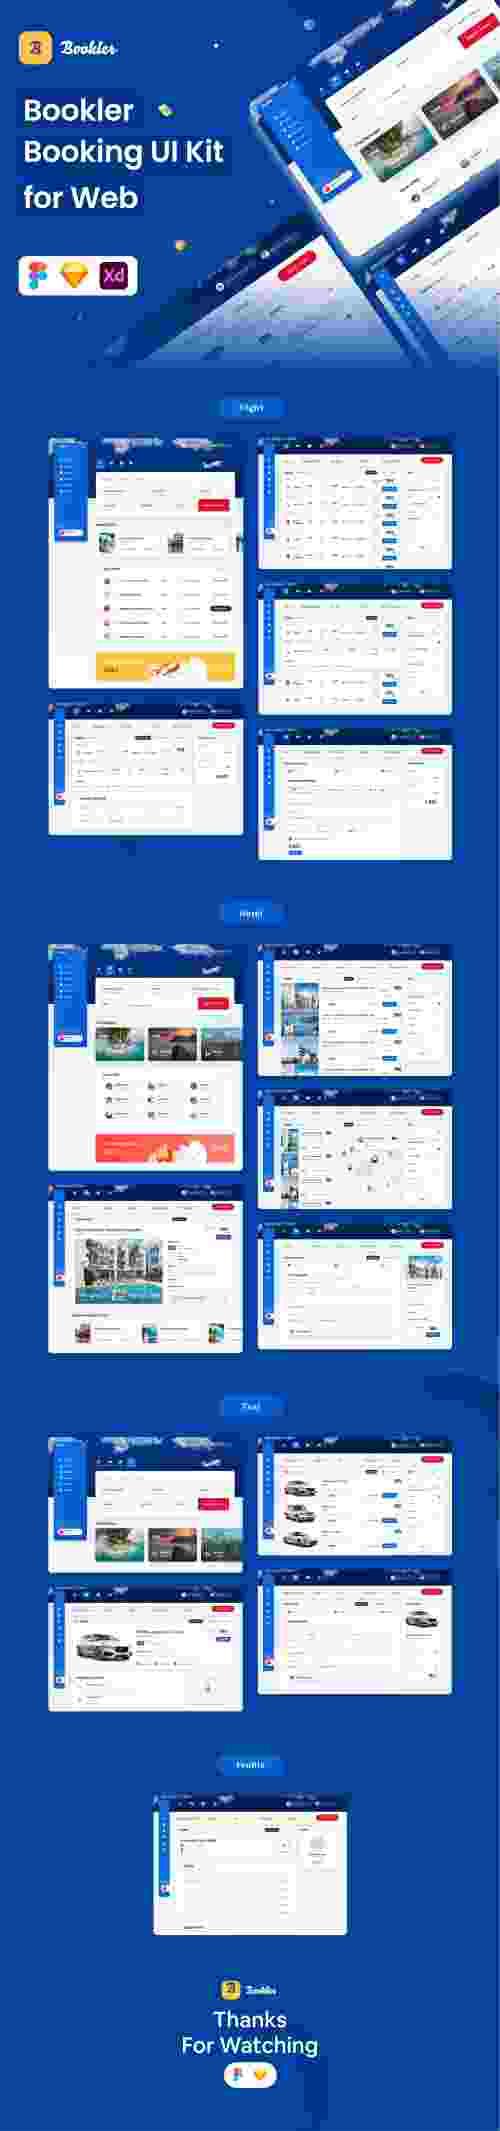 UIHut - Booking Web-App - 8063